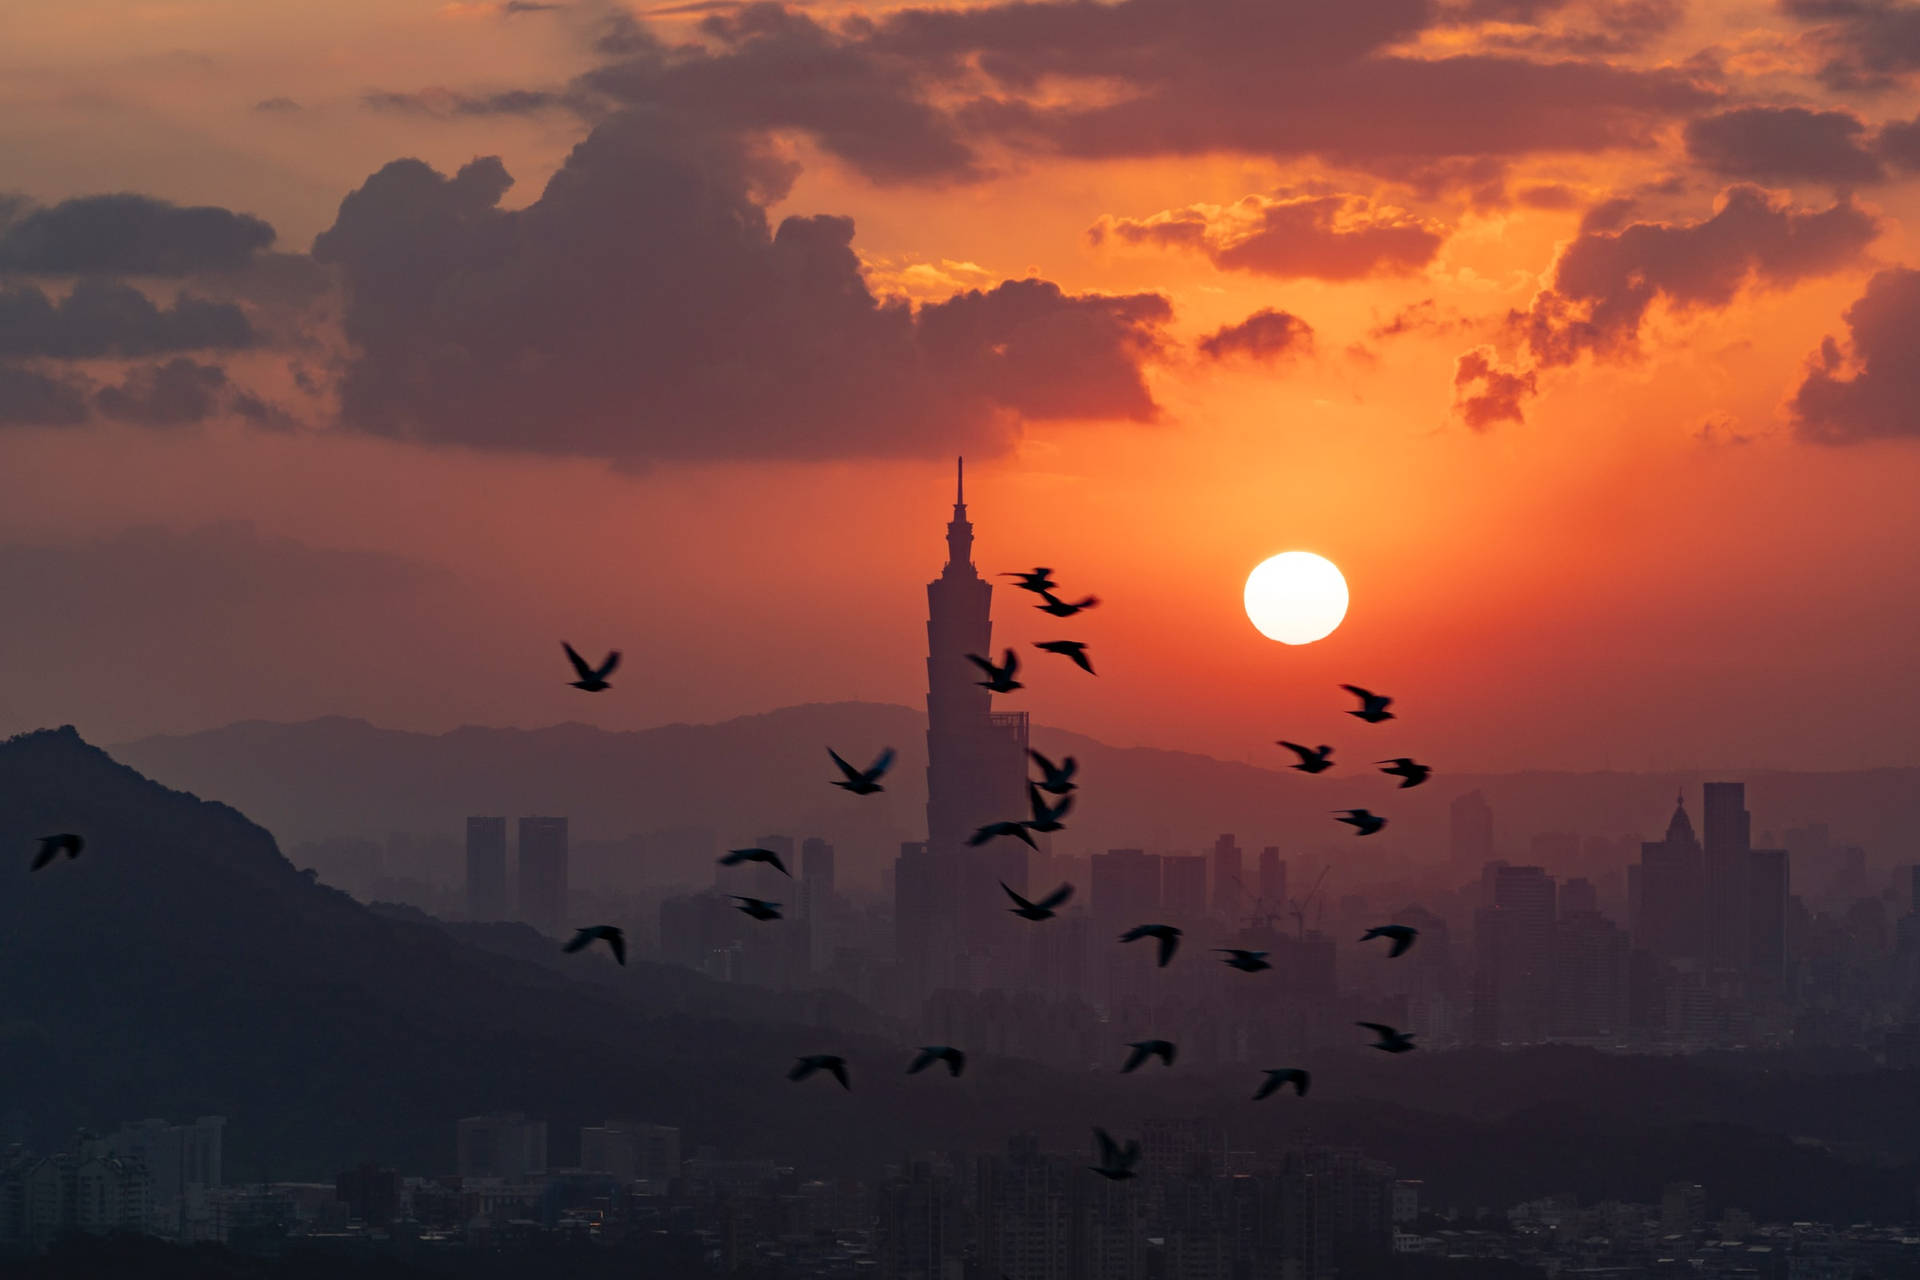 Taipeiatardecer Y Pájaros Fondo de pantalla